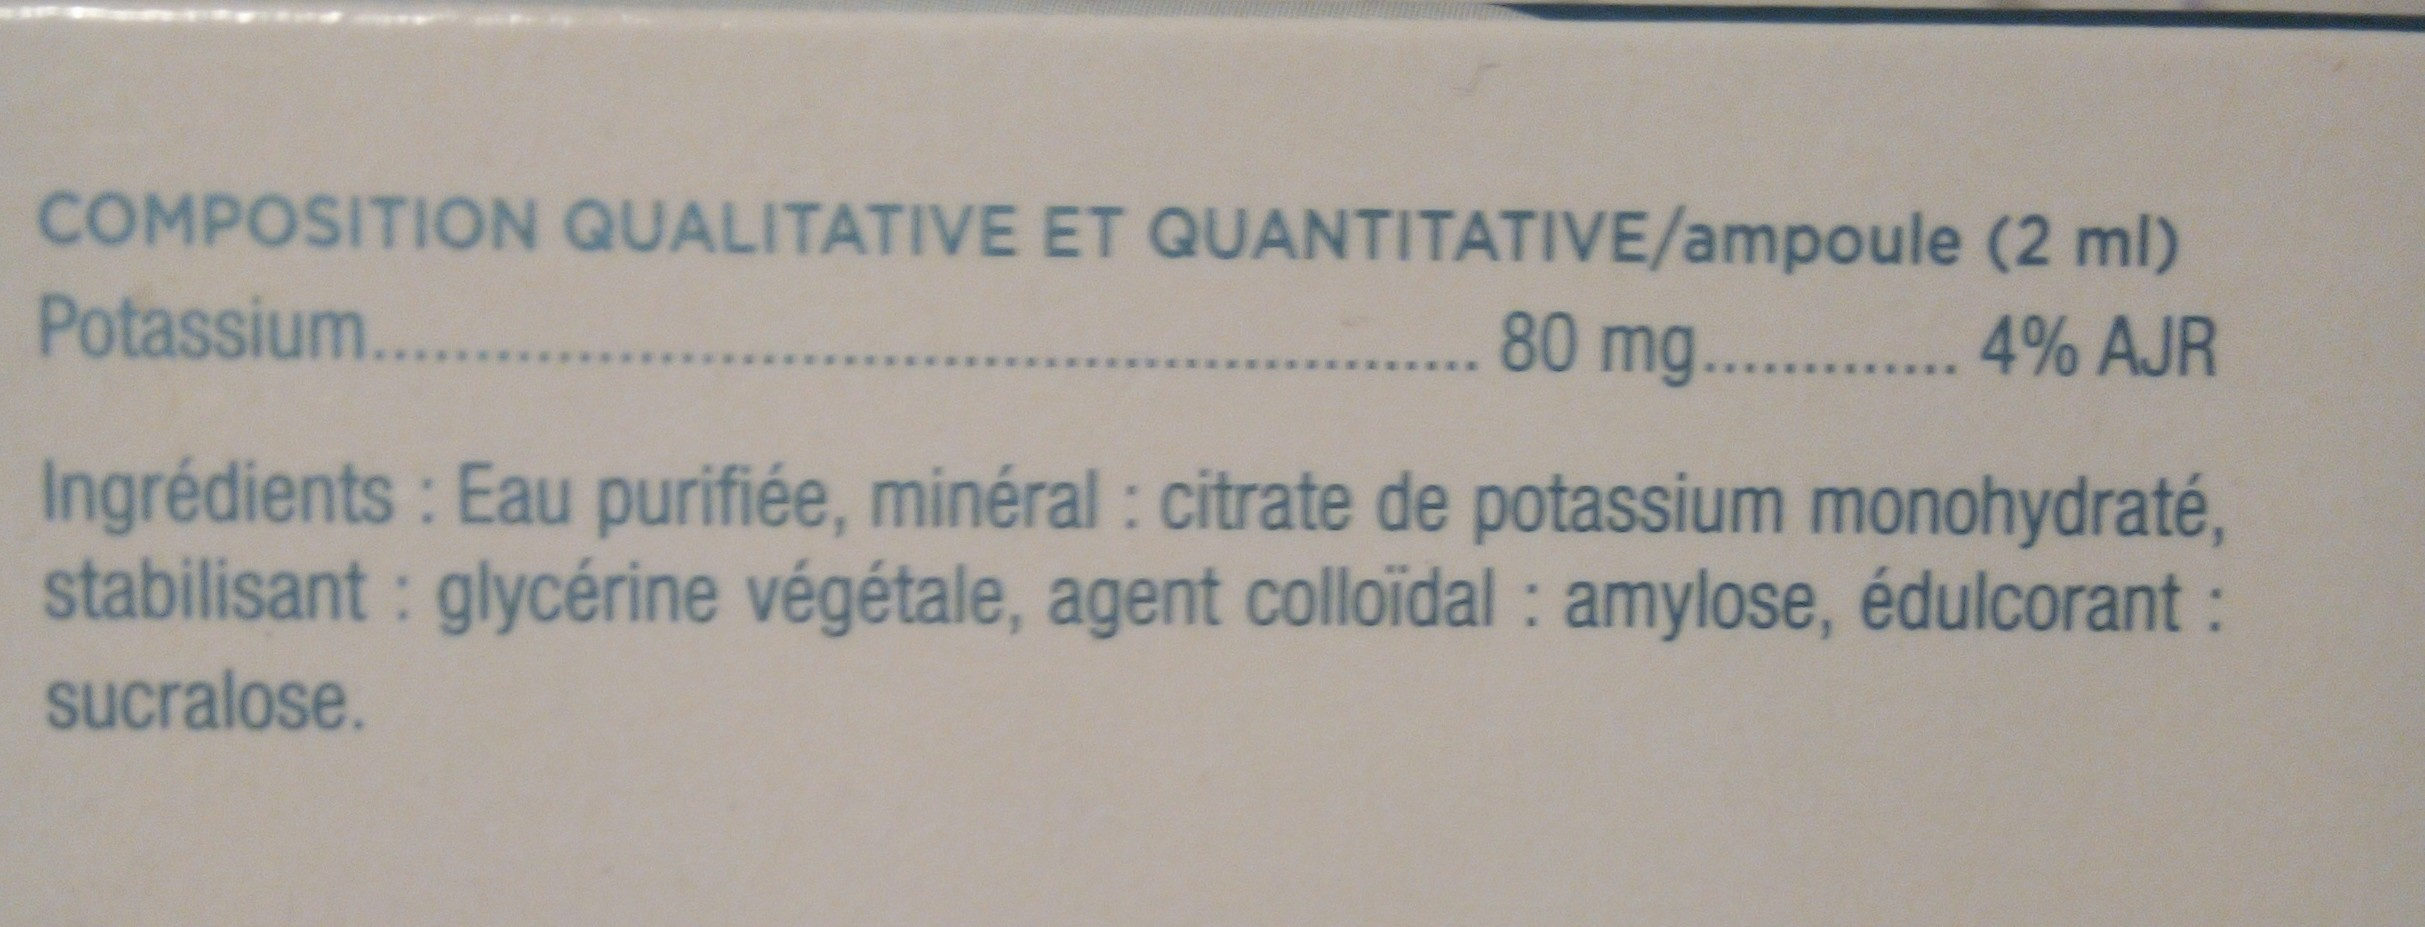 granions de potassium - Ingredients - fr